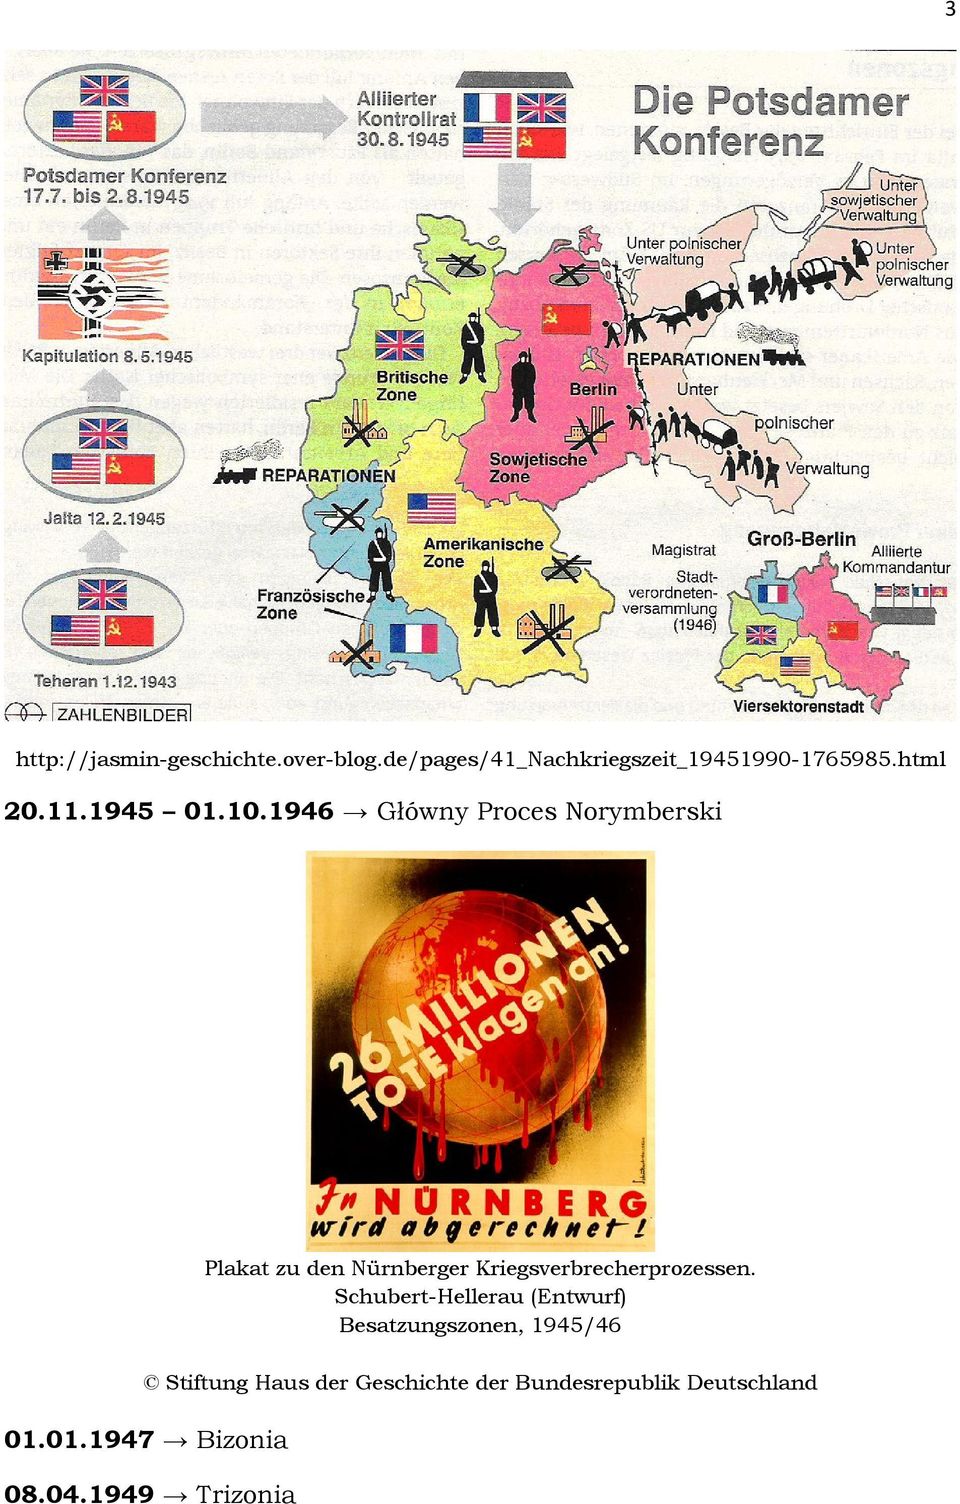 1946 Główny Proces Norymberski Plakat zu den Nürnberger Kriegsverbrecherprozessen.